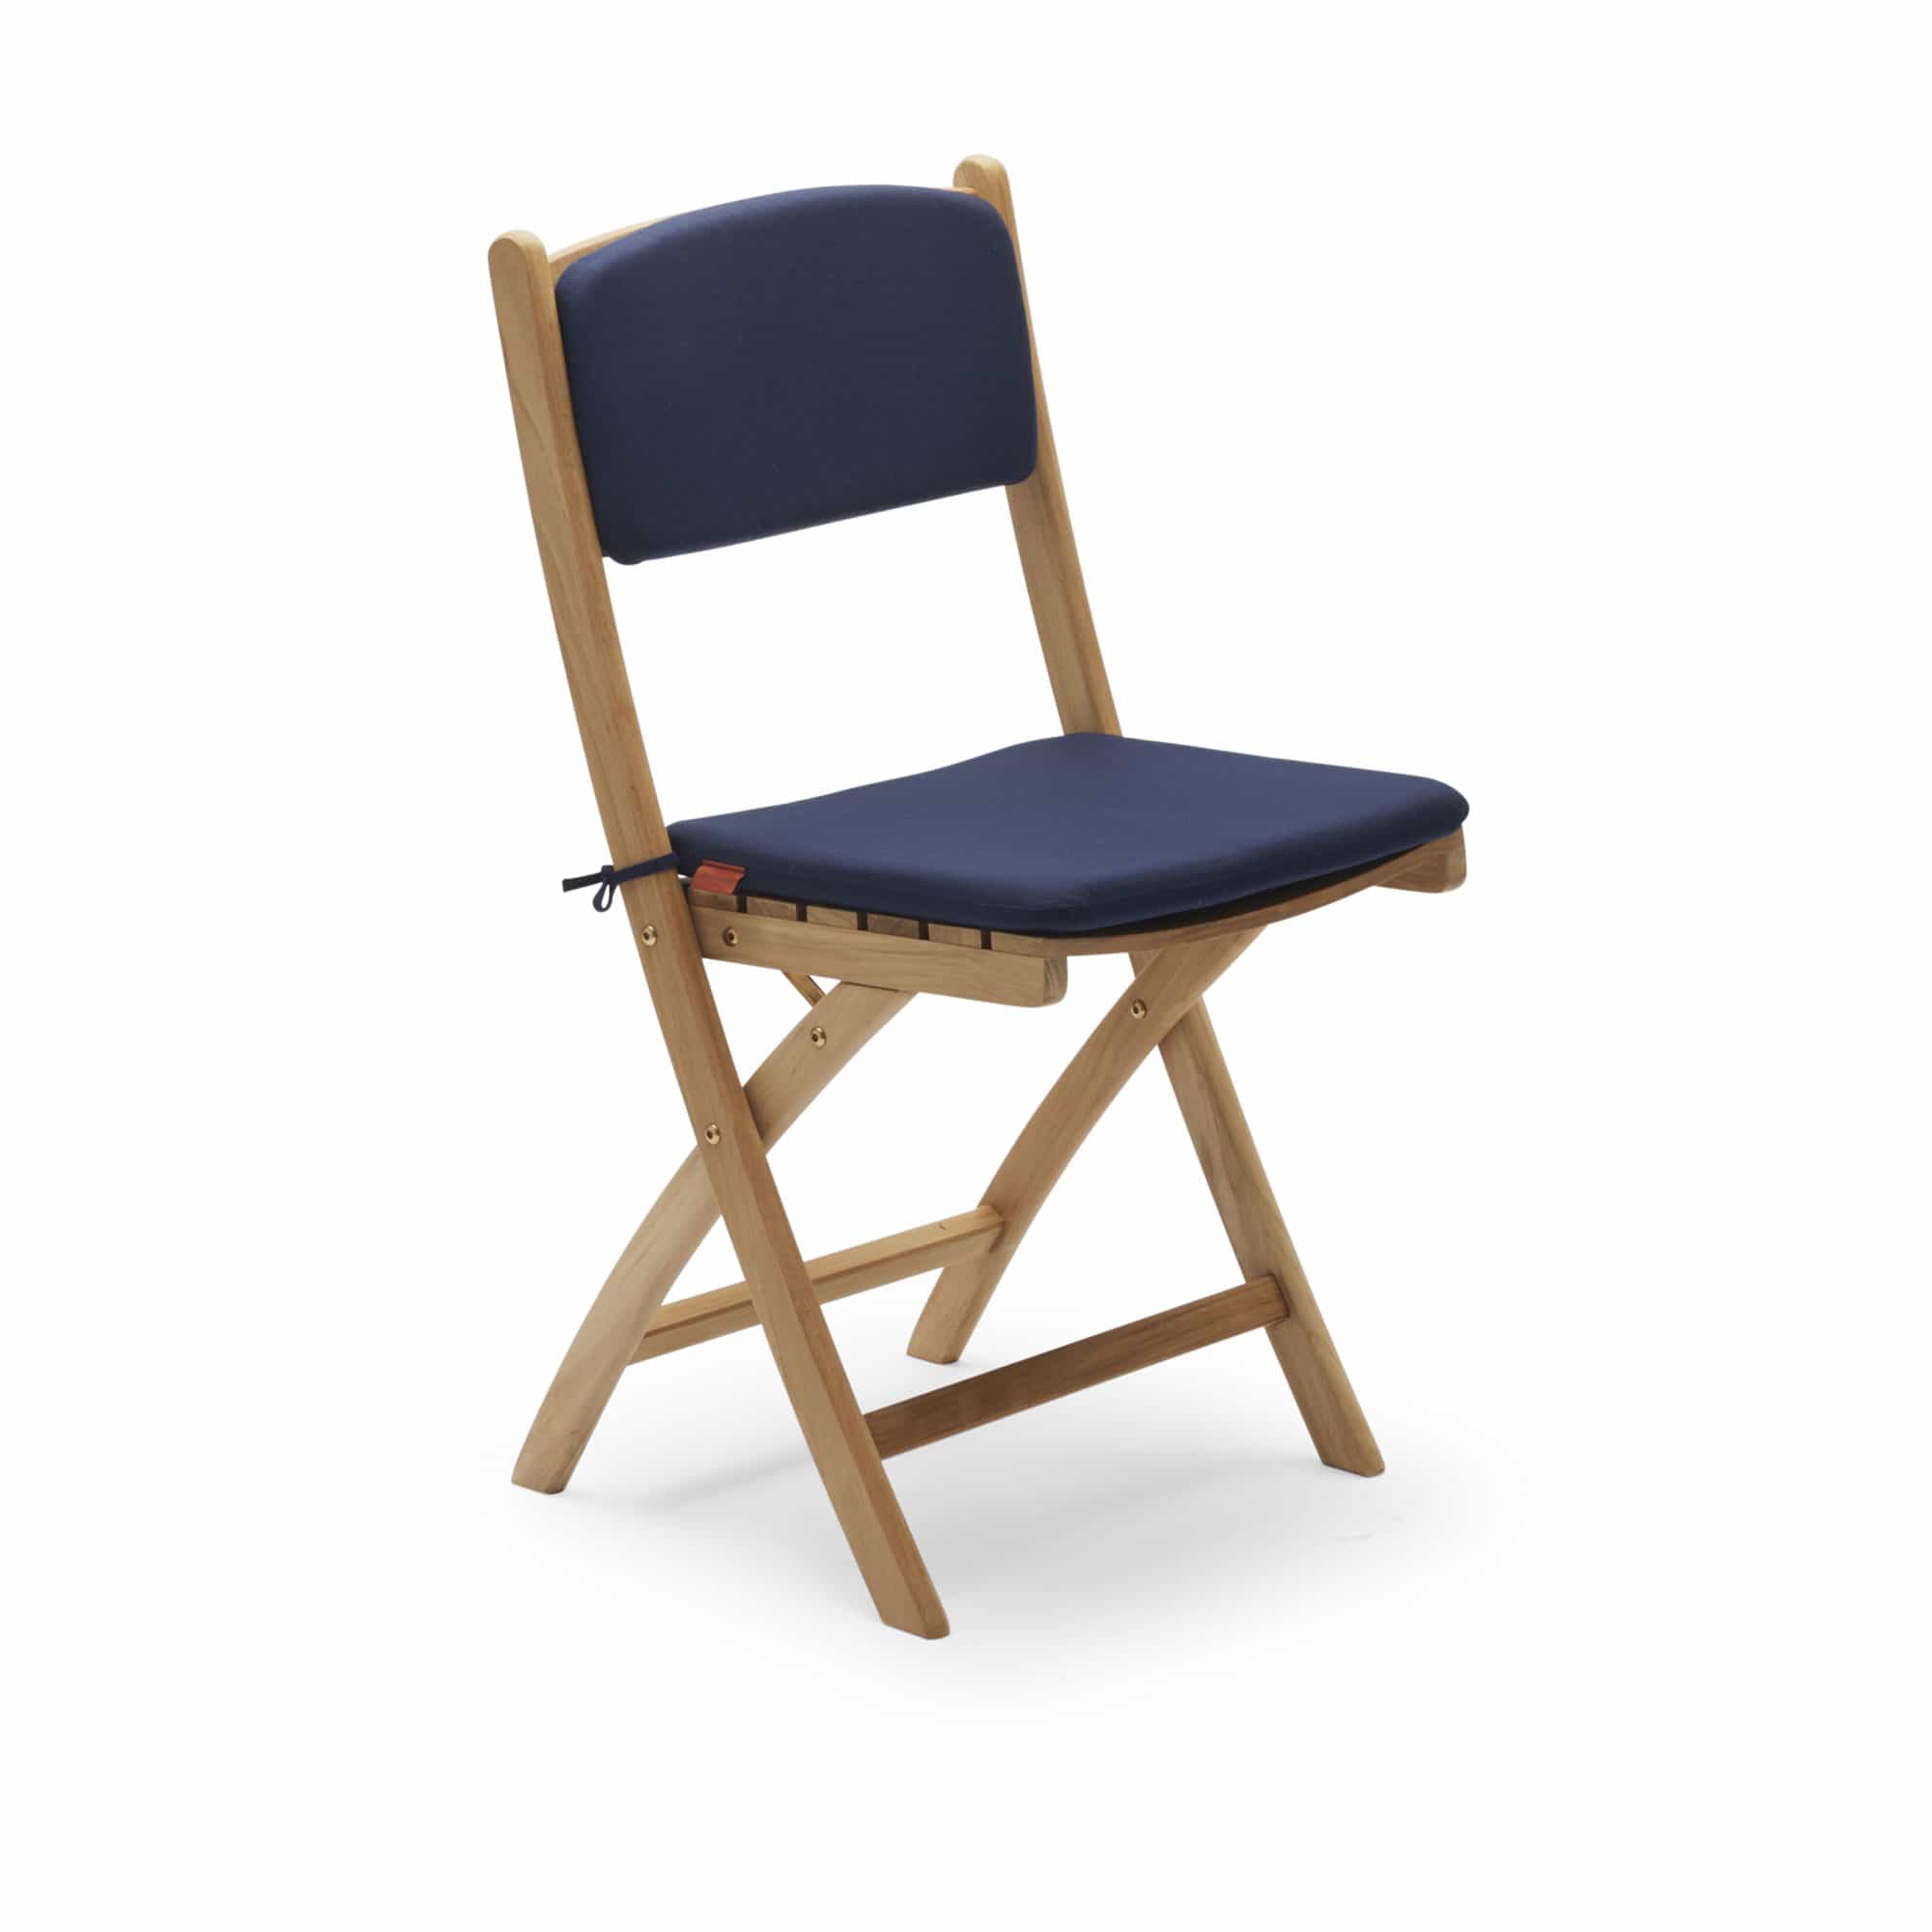 Selandia Chair Cushion, Quickdry Outdoor Foam, Outdoor Textile / Marine